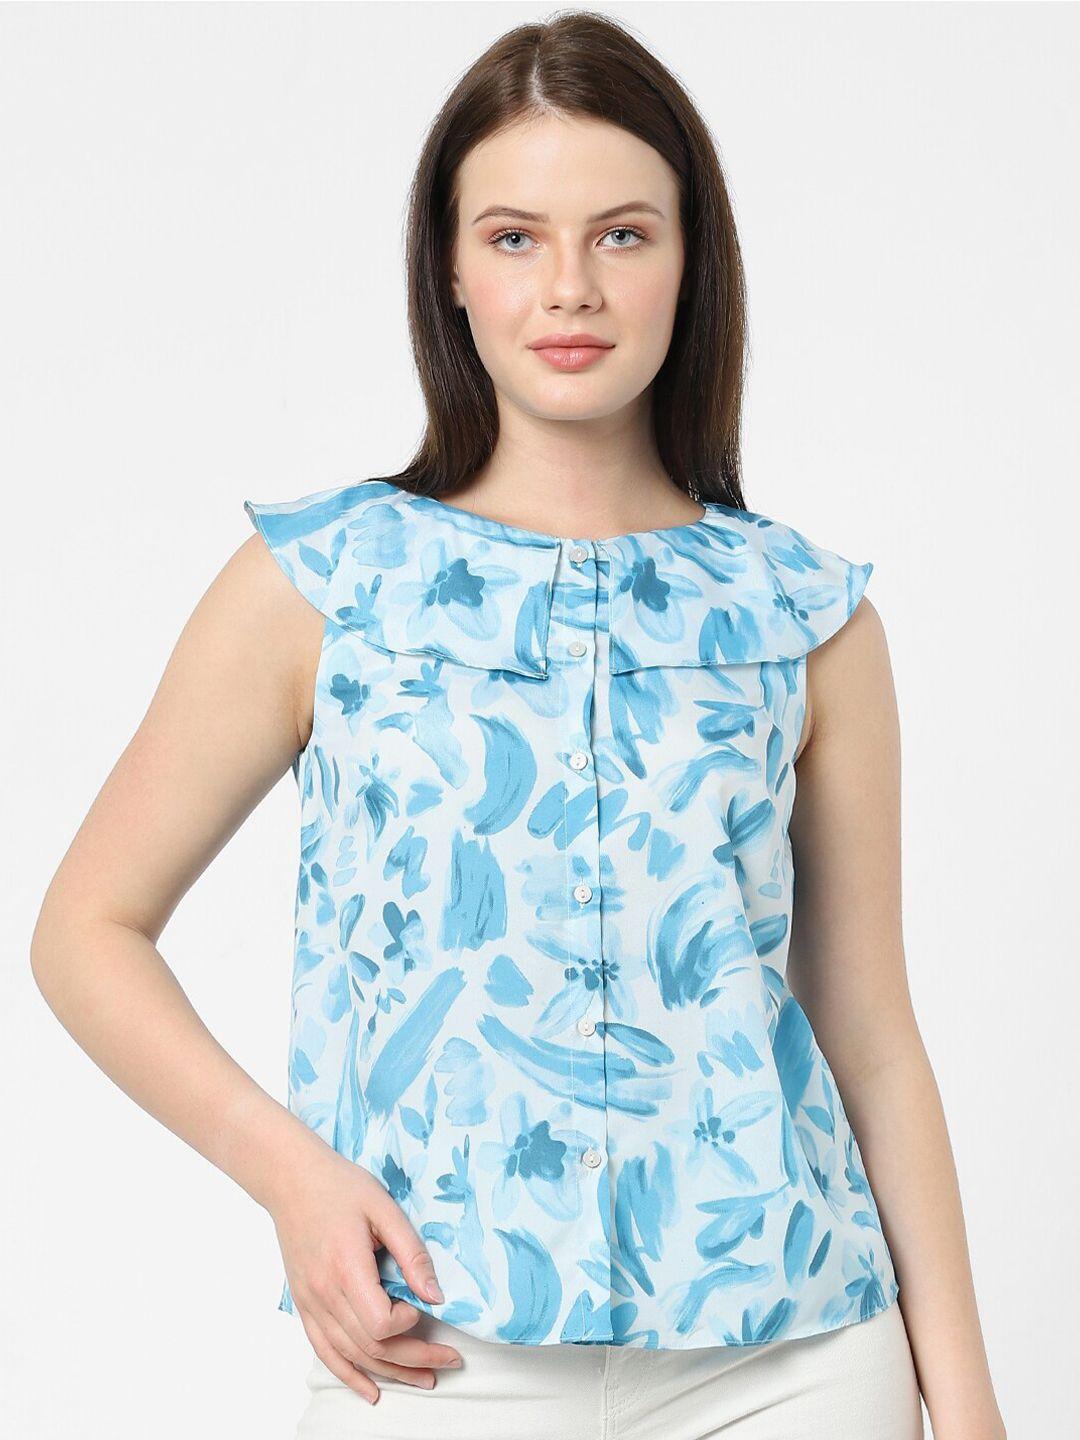 vero moda blue floral print shirt style top